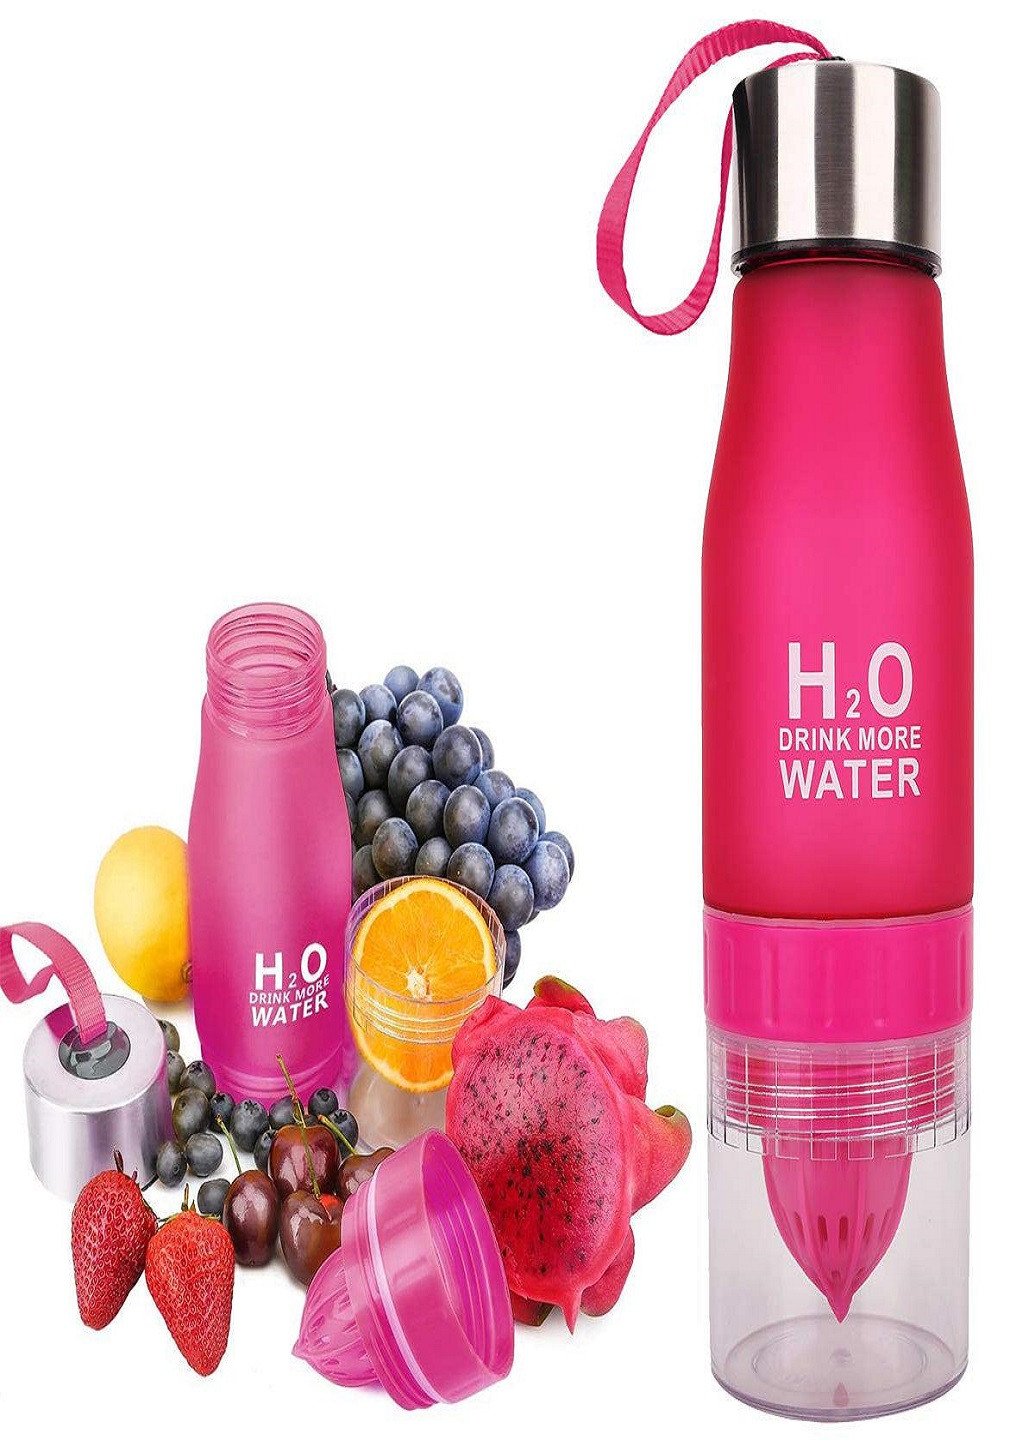 Універсальна пляшка для напоїв із соковижималкою H2O Drink More Water 650 мл Рожева VTech (260134025)